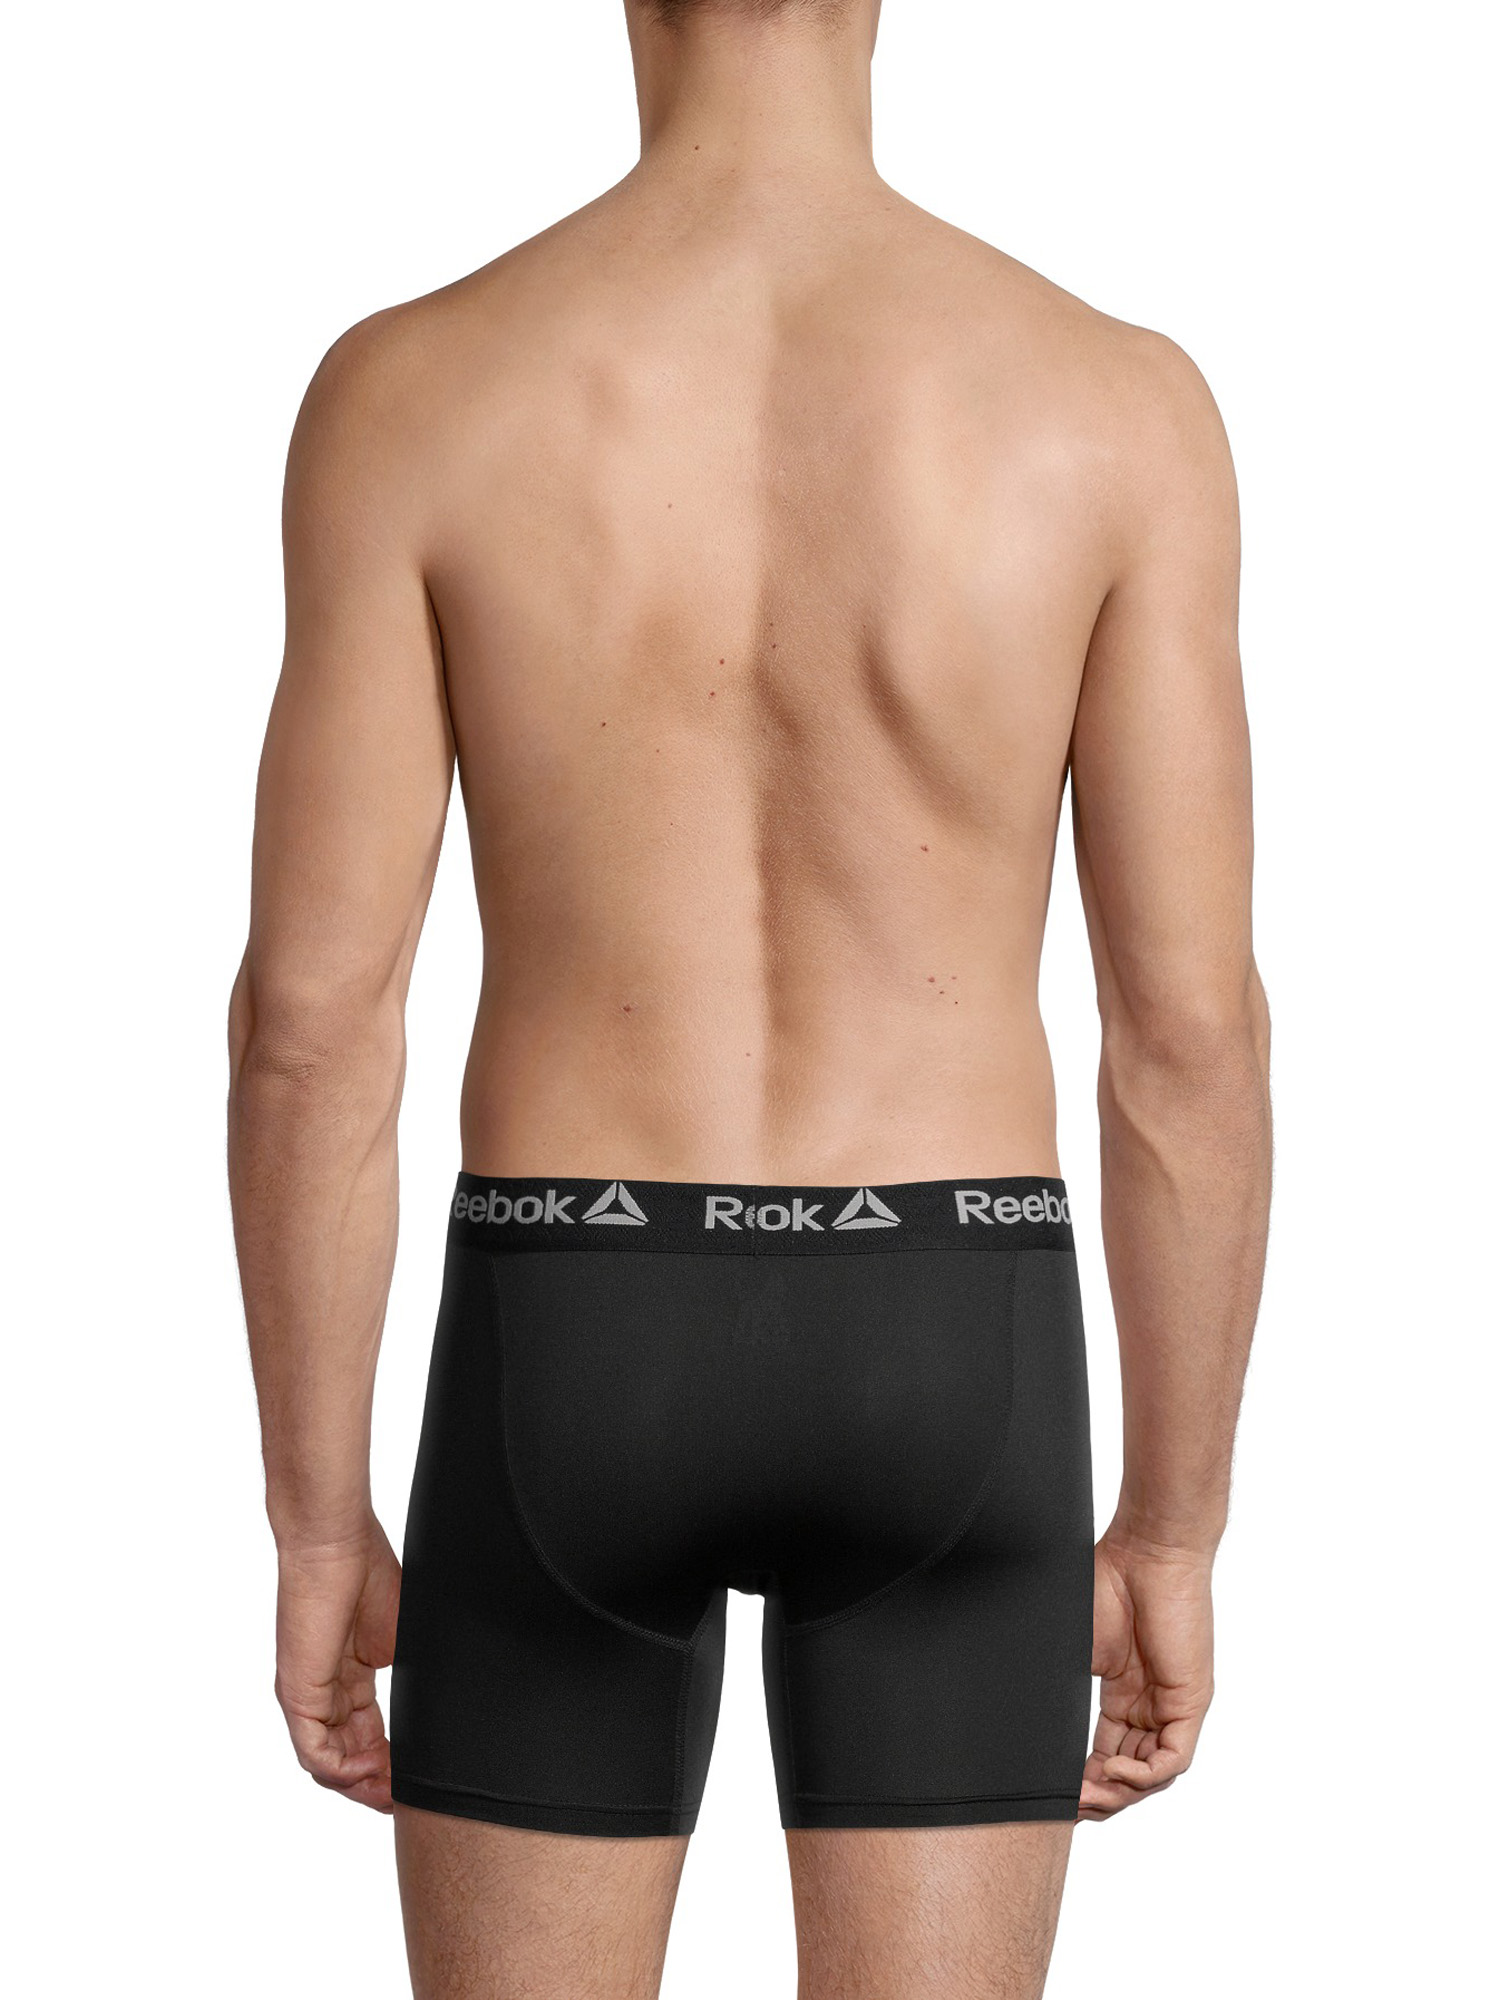 Reebok Men's Performance Regular Leg Boxer Briefs, 4 Pack - image 5 of 8